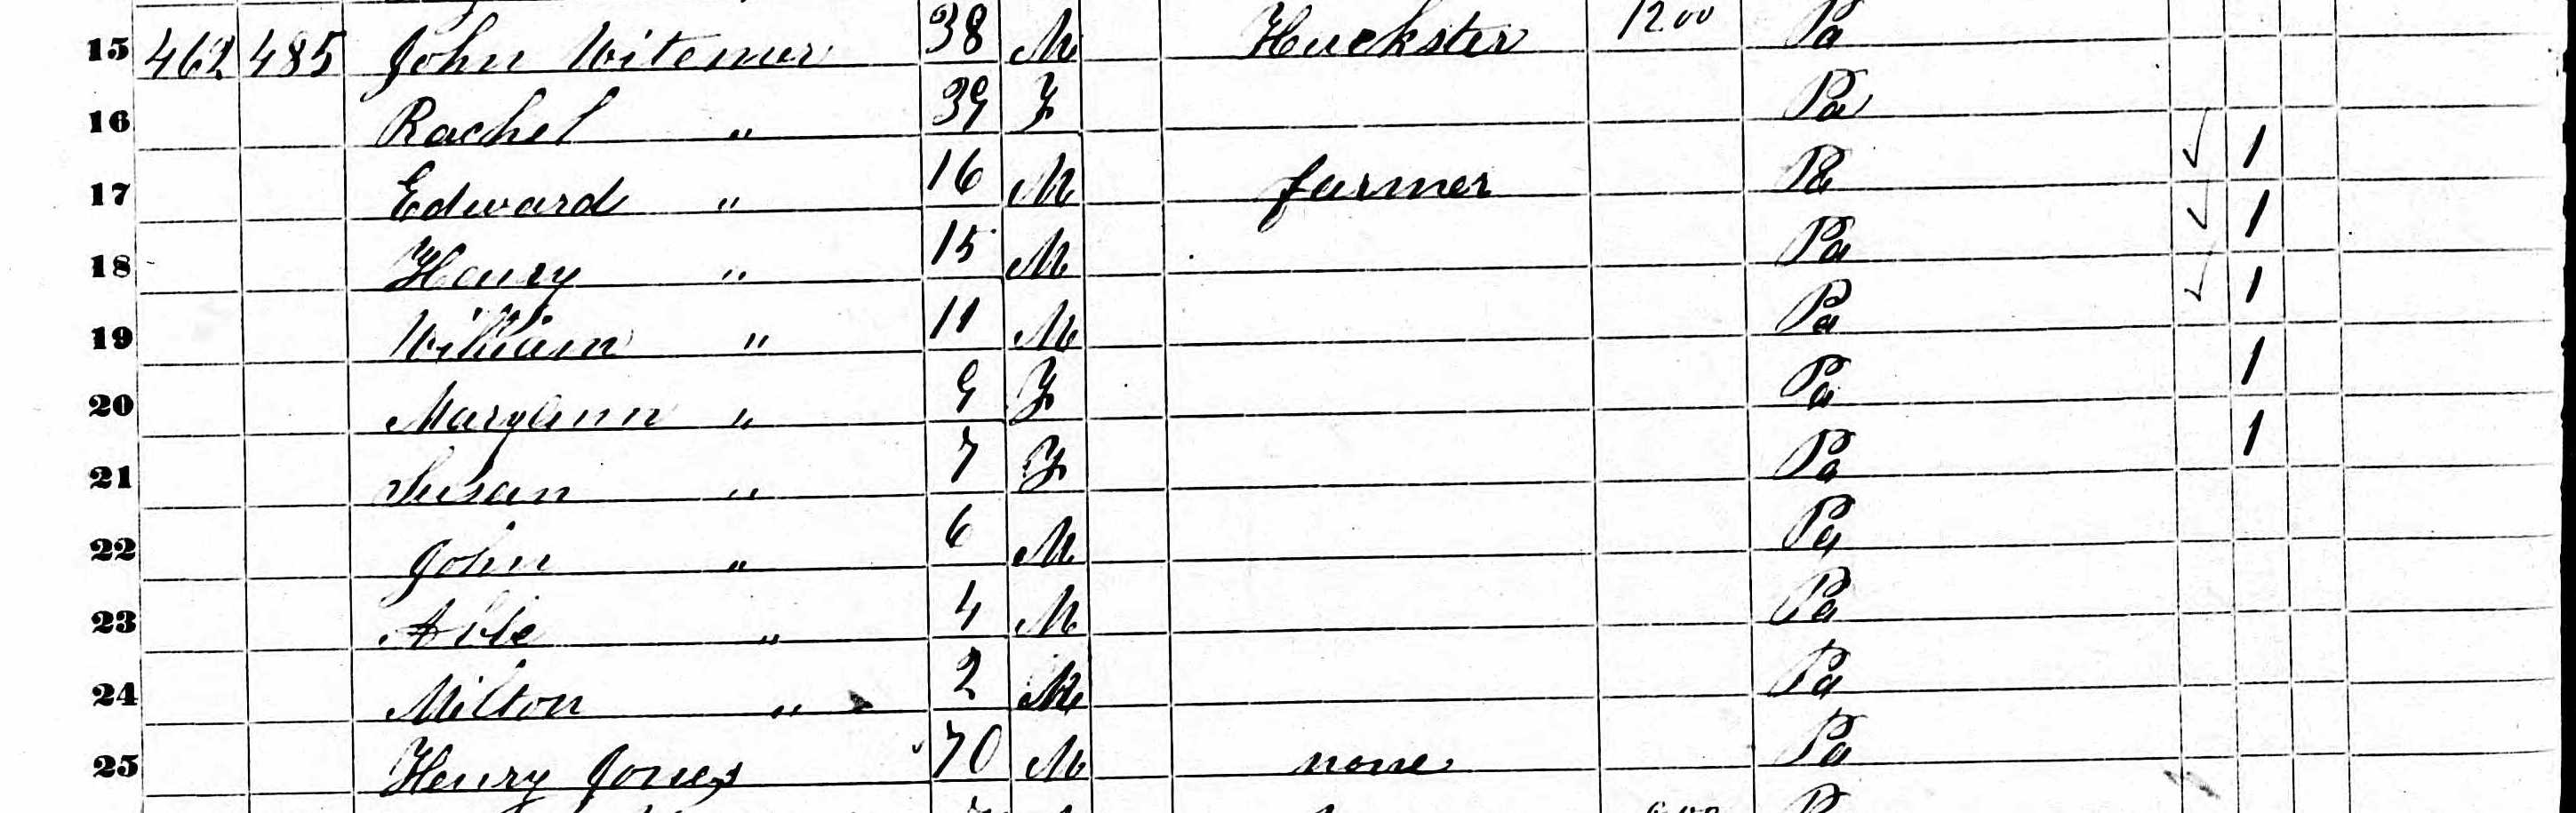 1850 John Witemer census